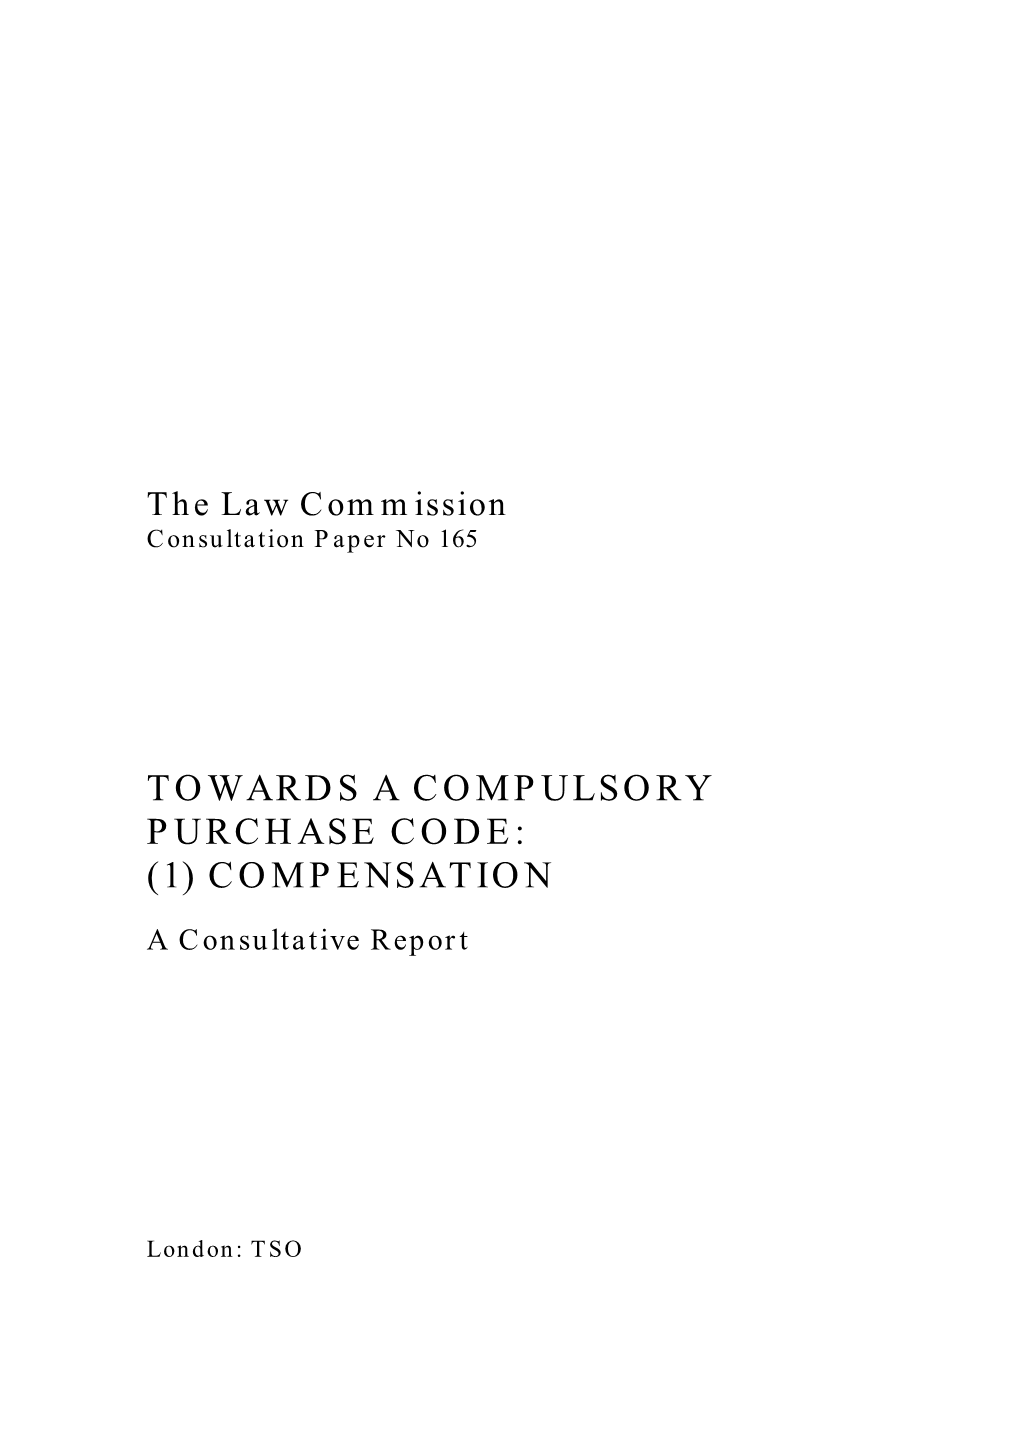 Towards a Compulsory Purchase Code: (1) Compensation